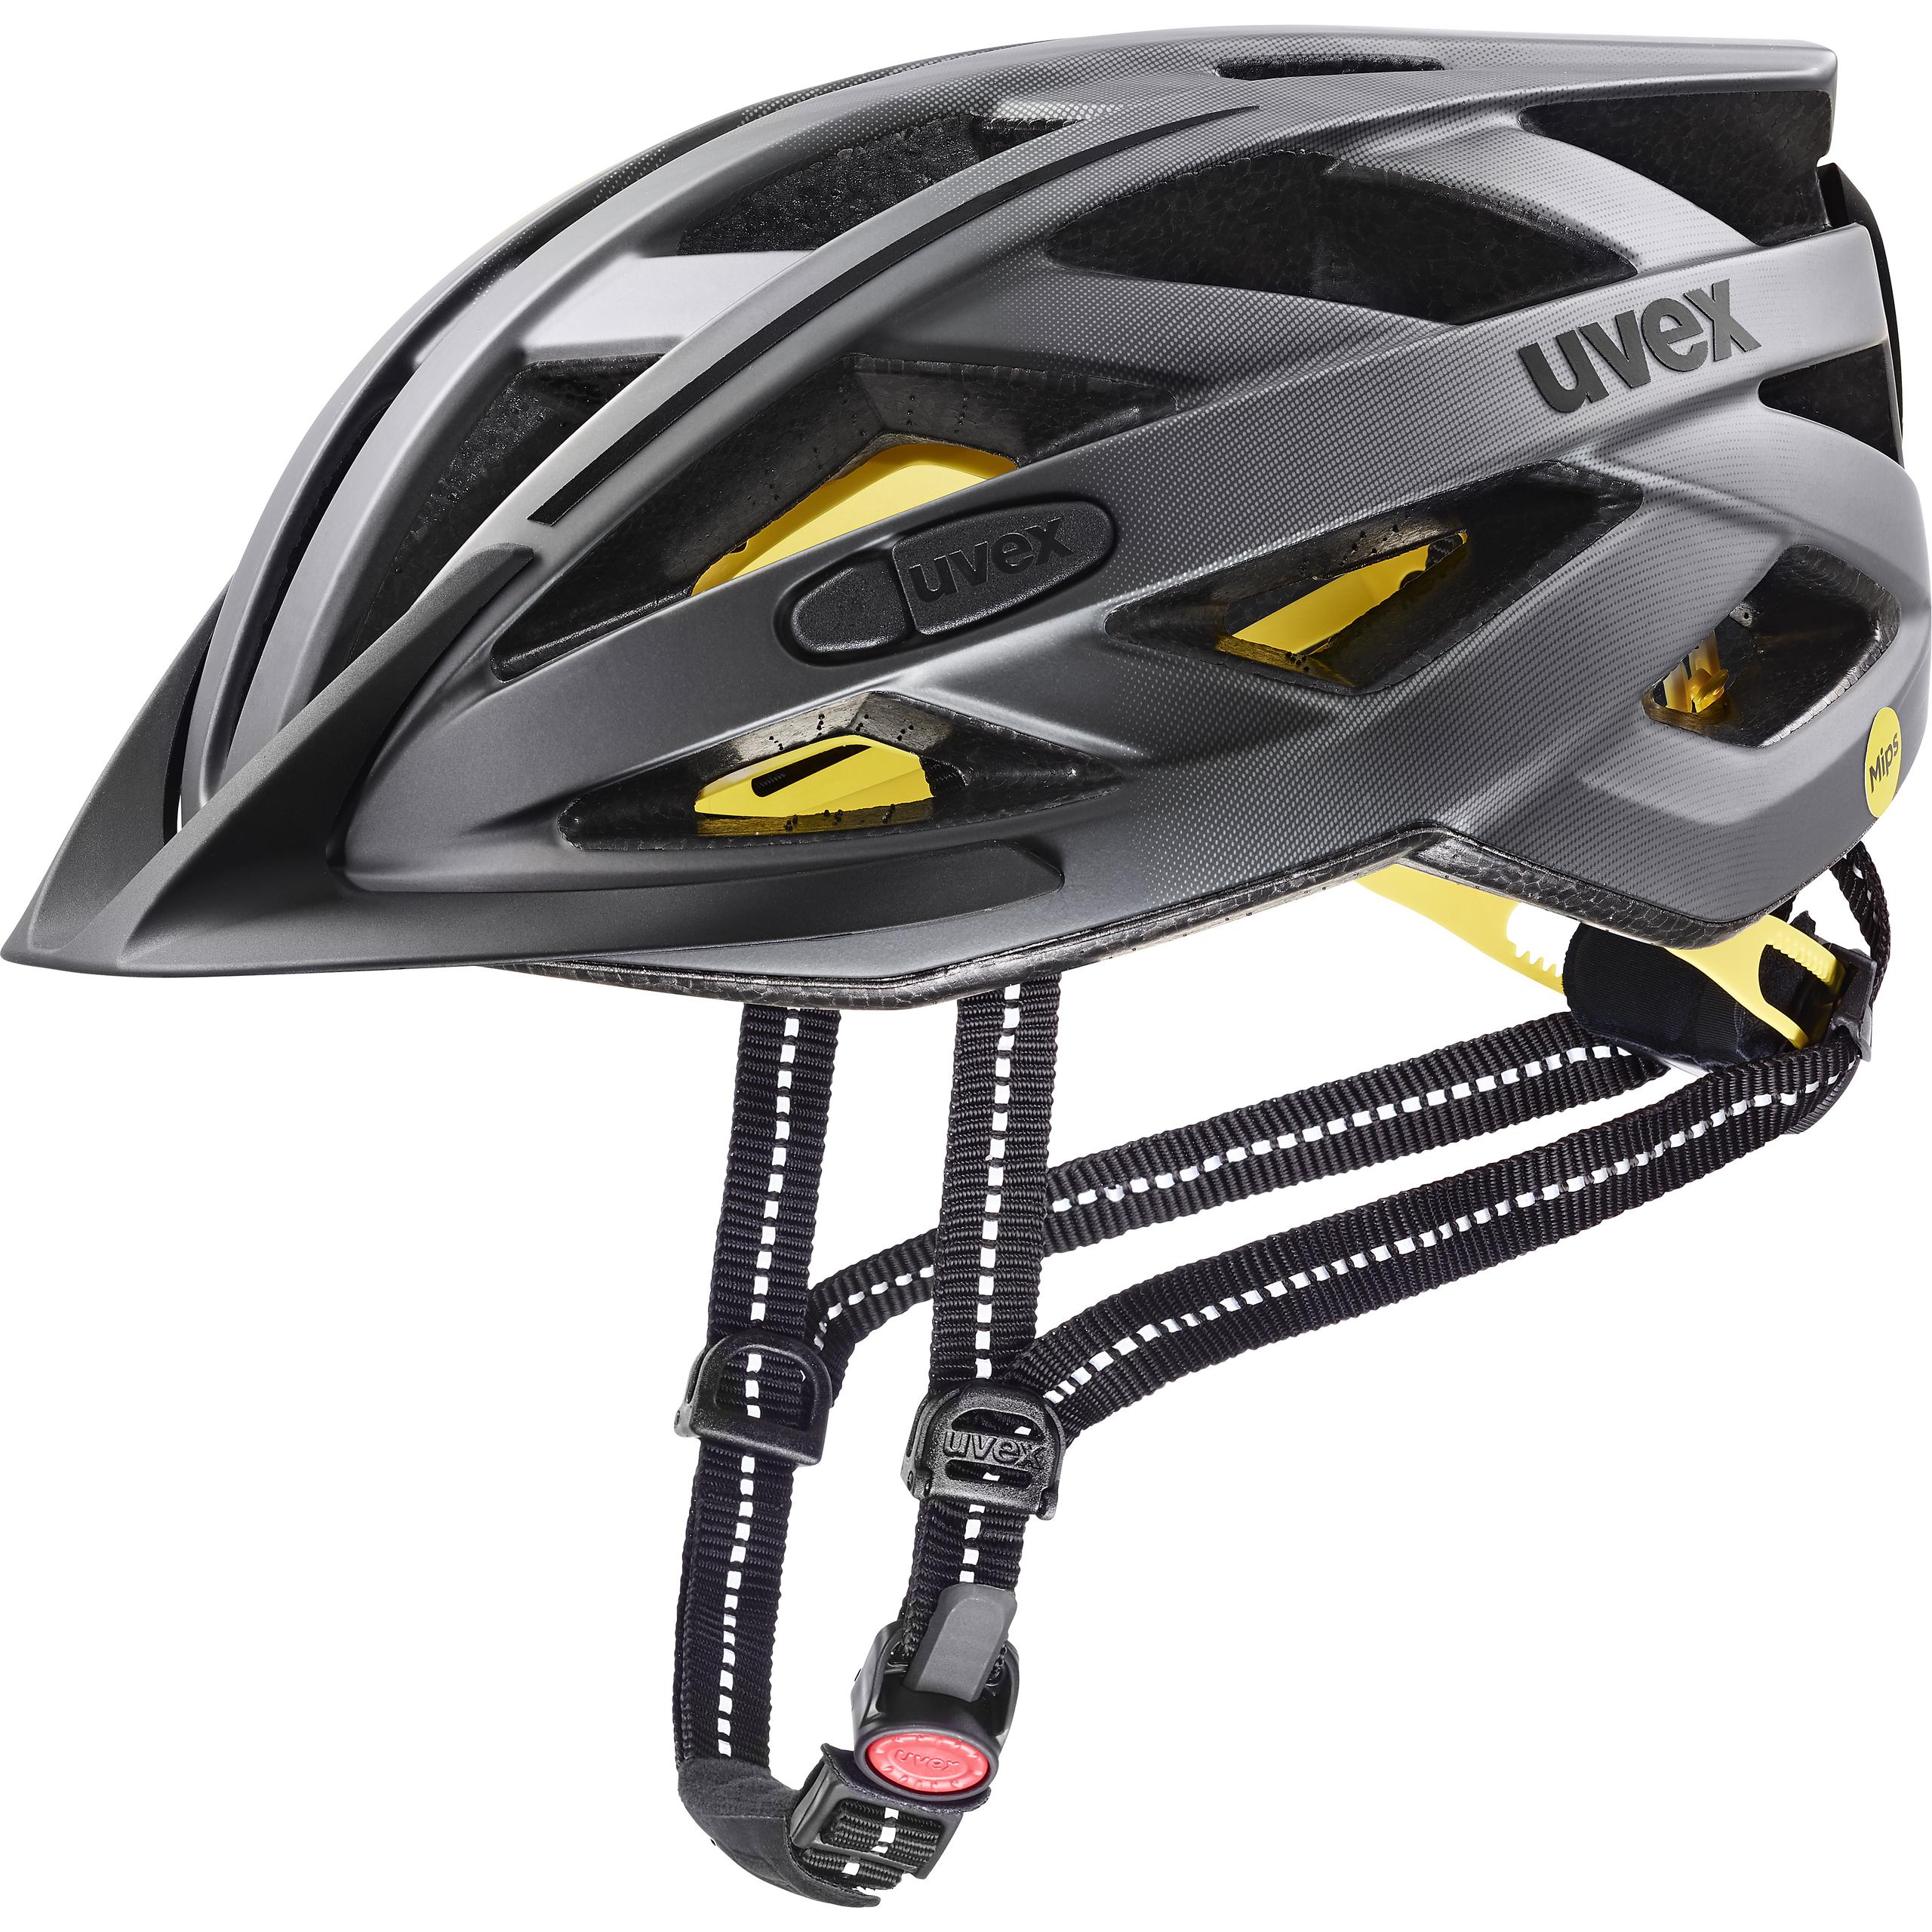 Uvex City I-VO Fahrrad Helm grau matt 2020 